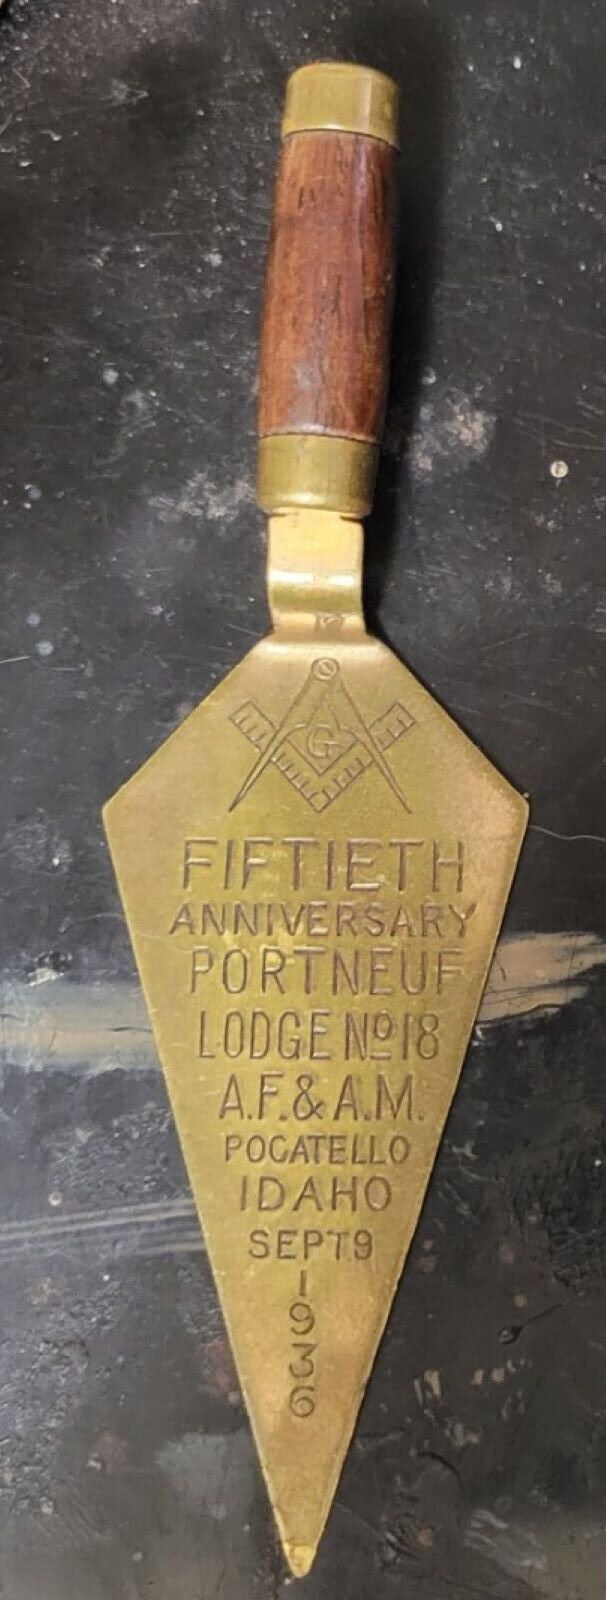 1936 Masonic Trowel Fiftieth Anniversary Port Neuf Lodge No 18 Pocatello, Idaho